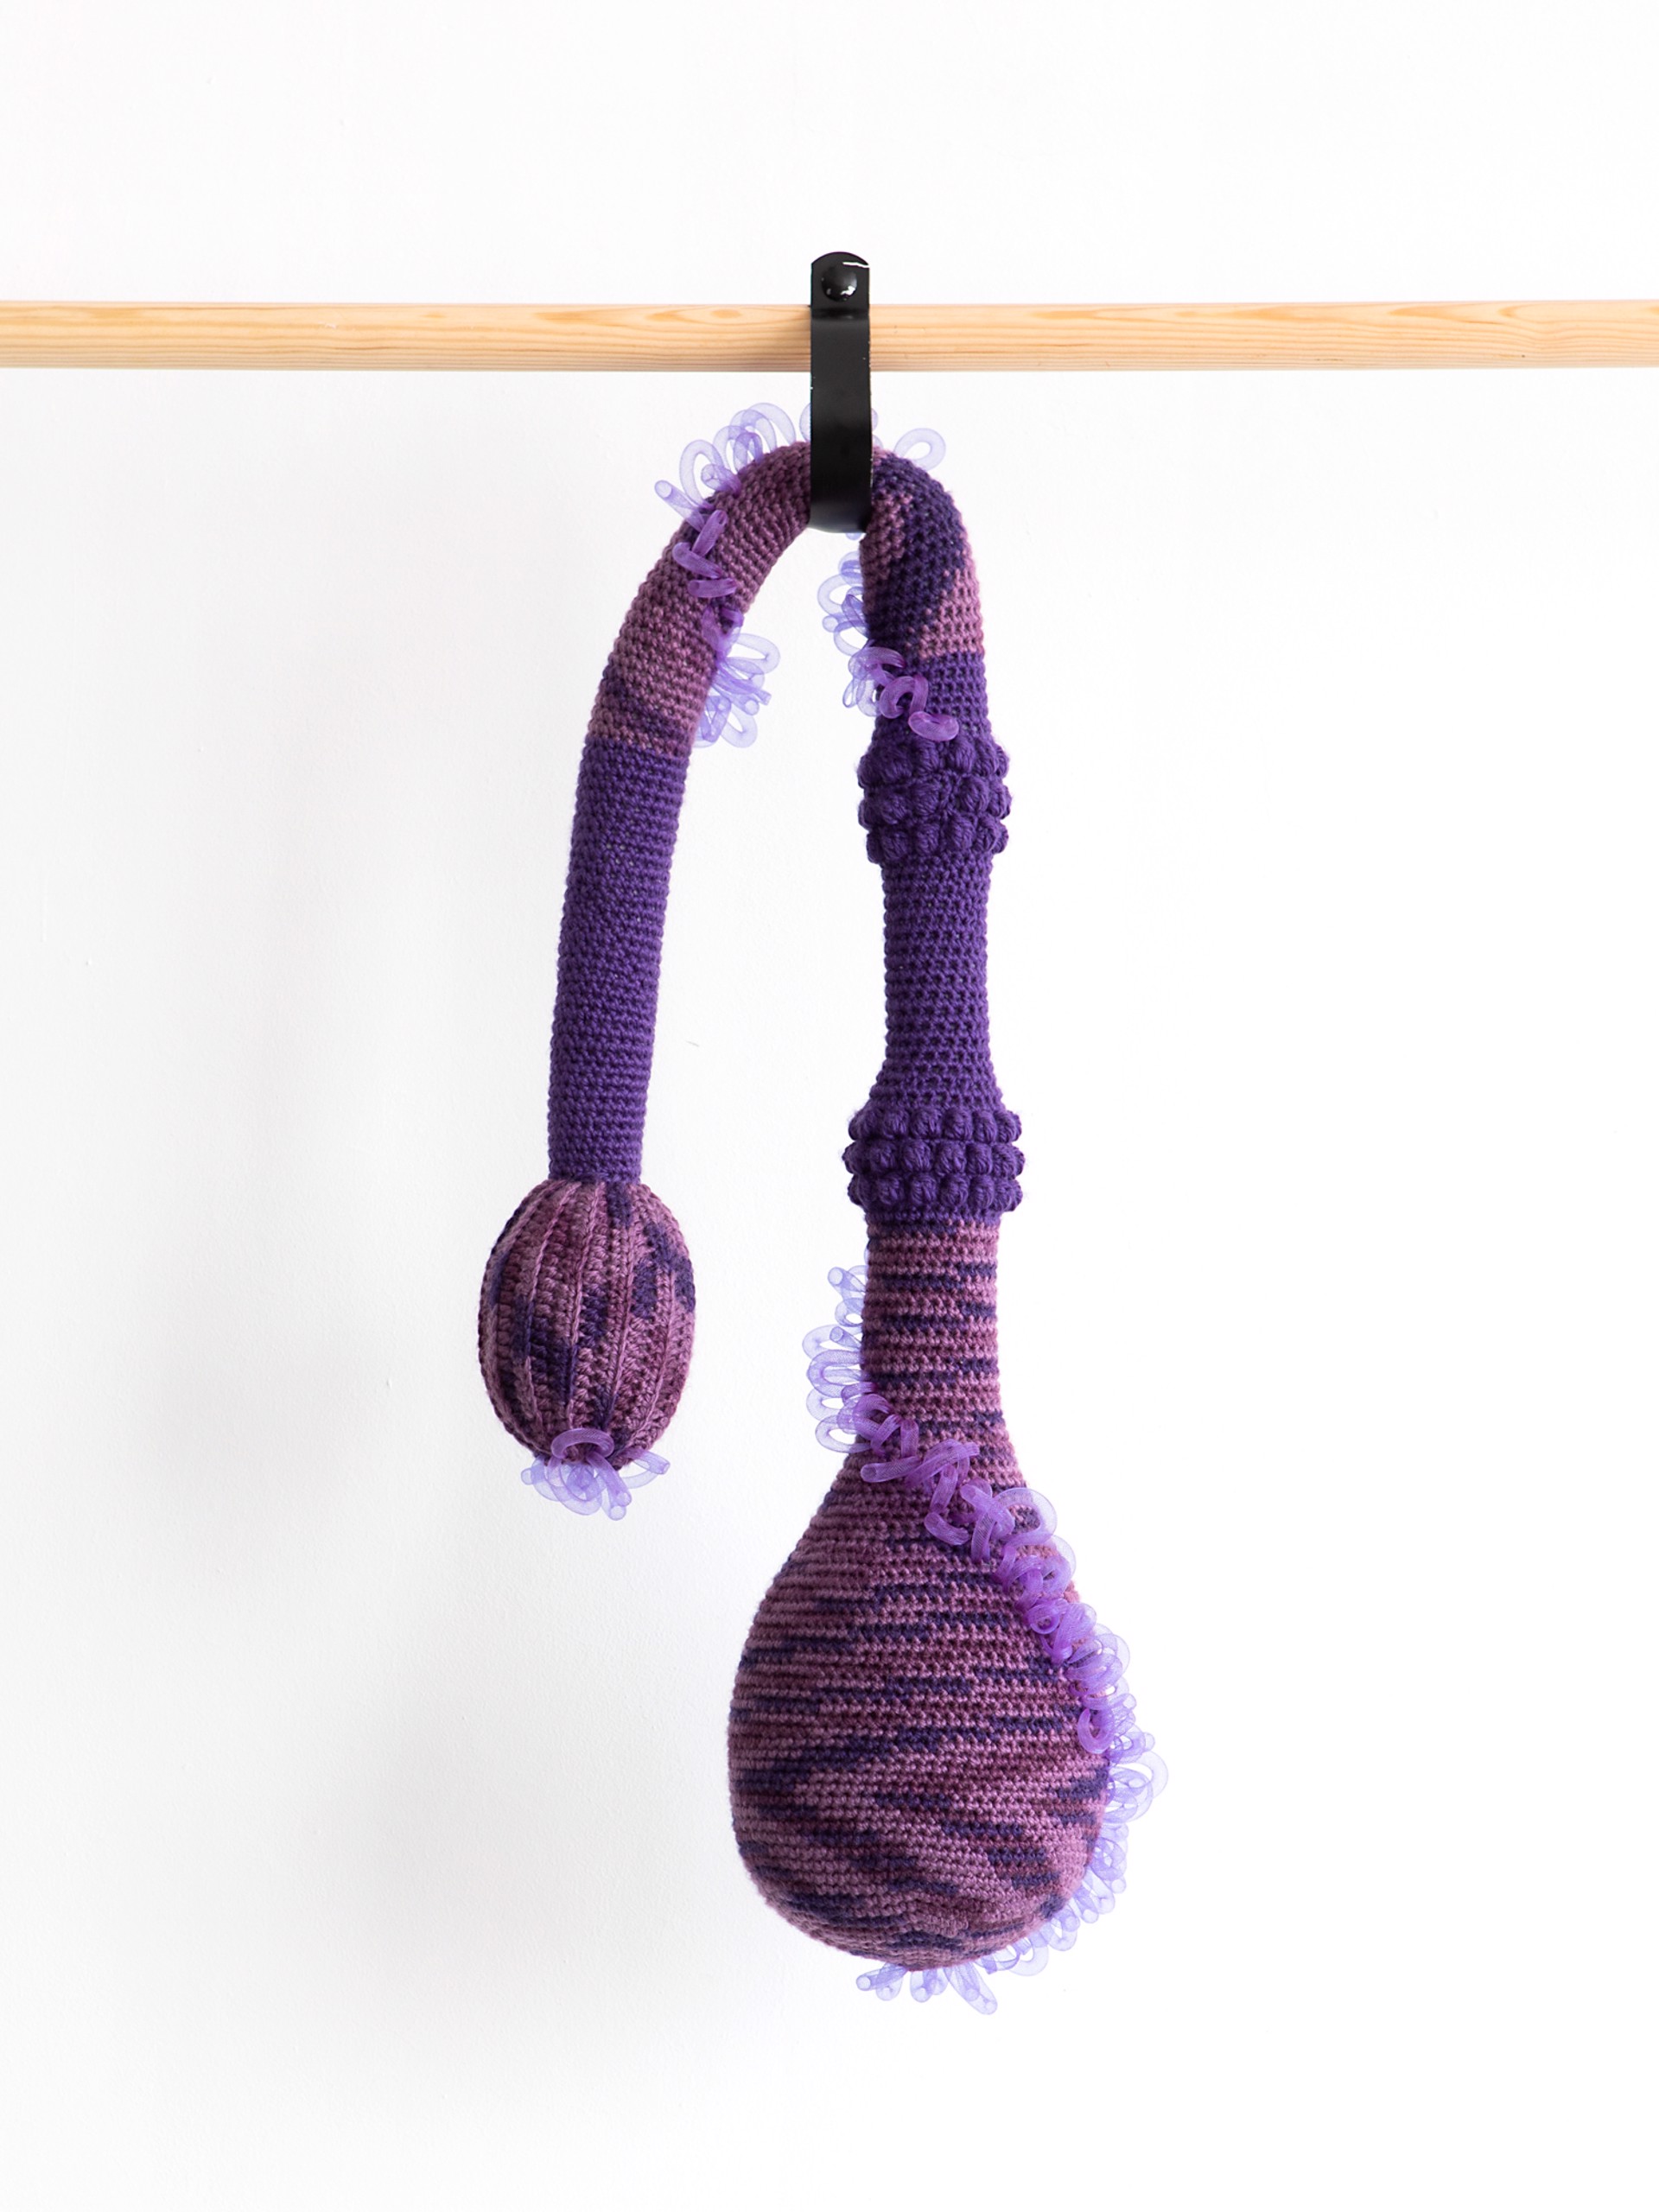 Hanging piece "Purple" by Monica Ceballos Brenninkmeijer